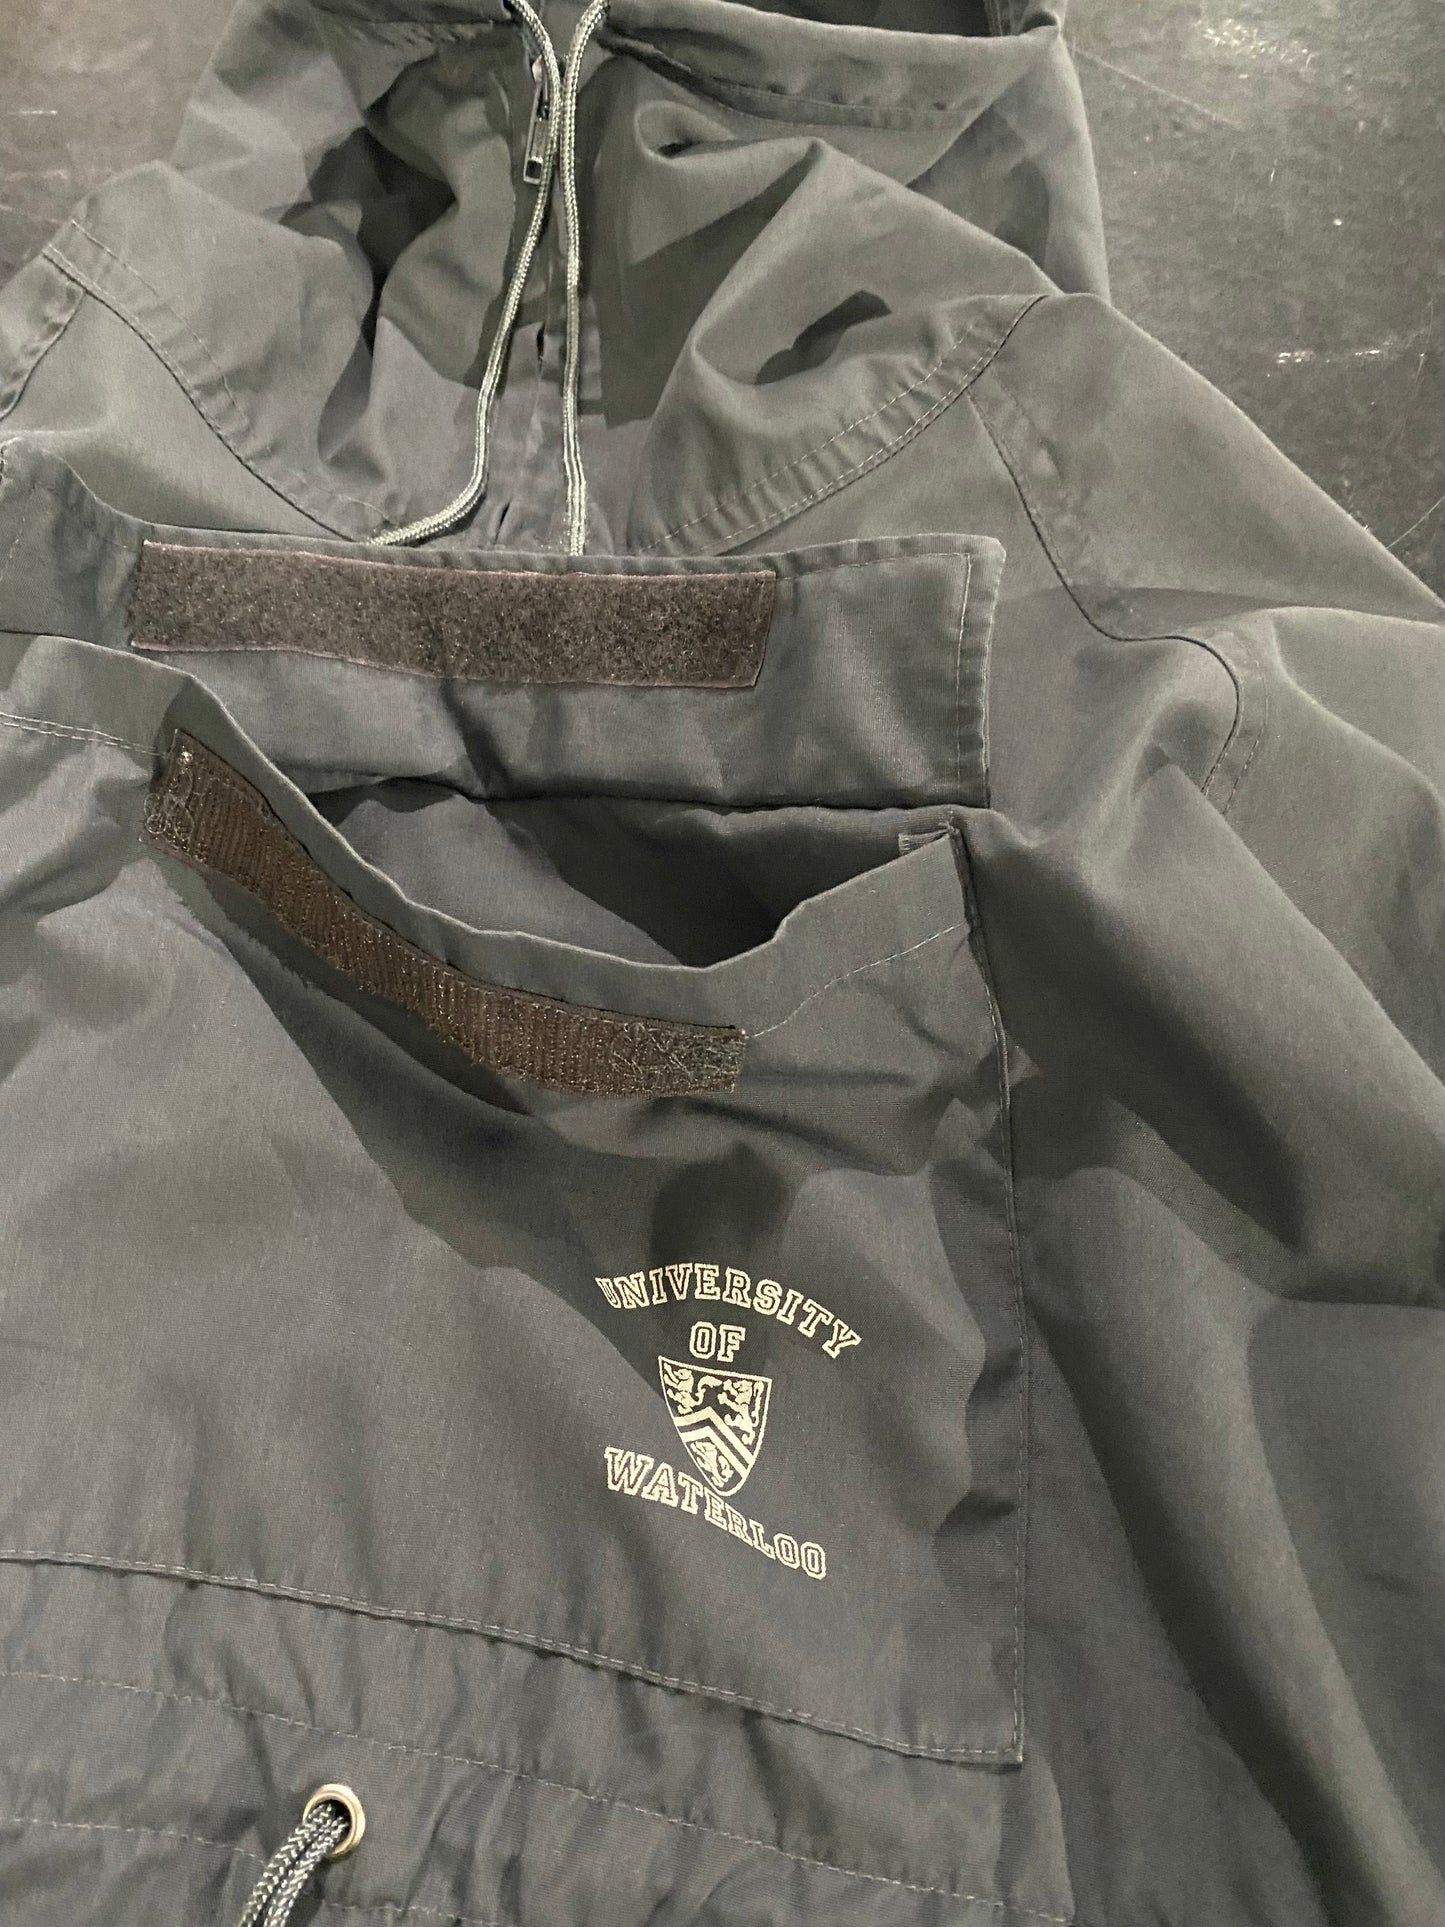 UNIVERSITY OF WATERLOO anorak jacket